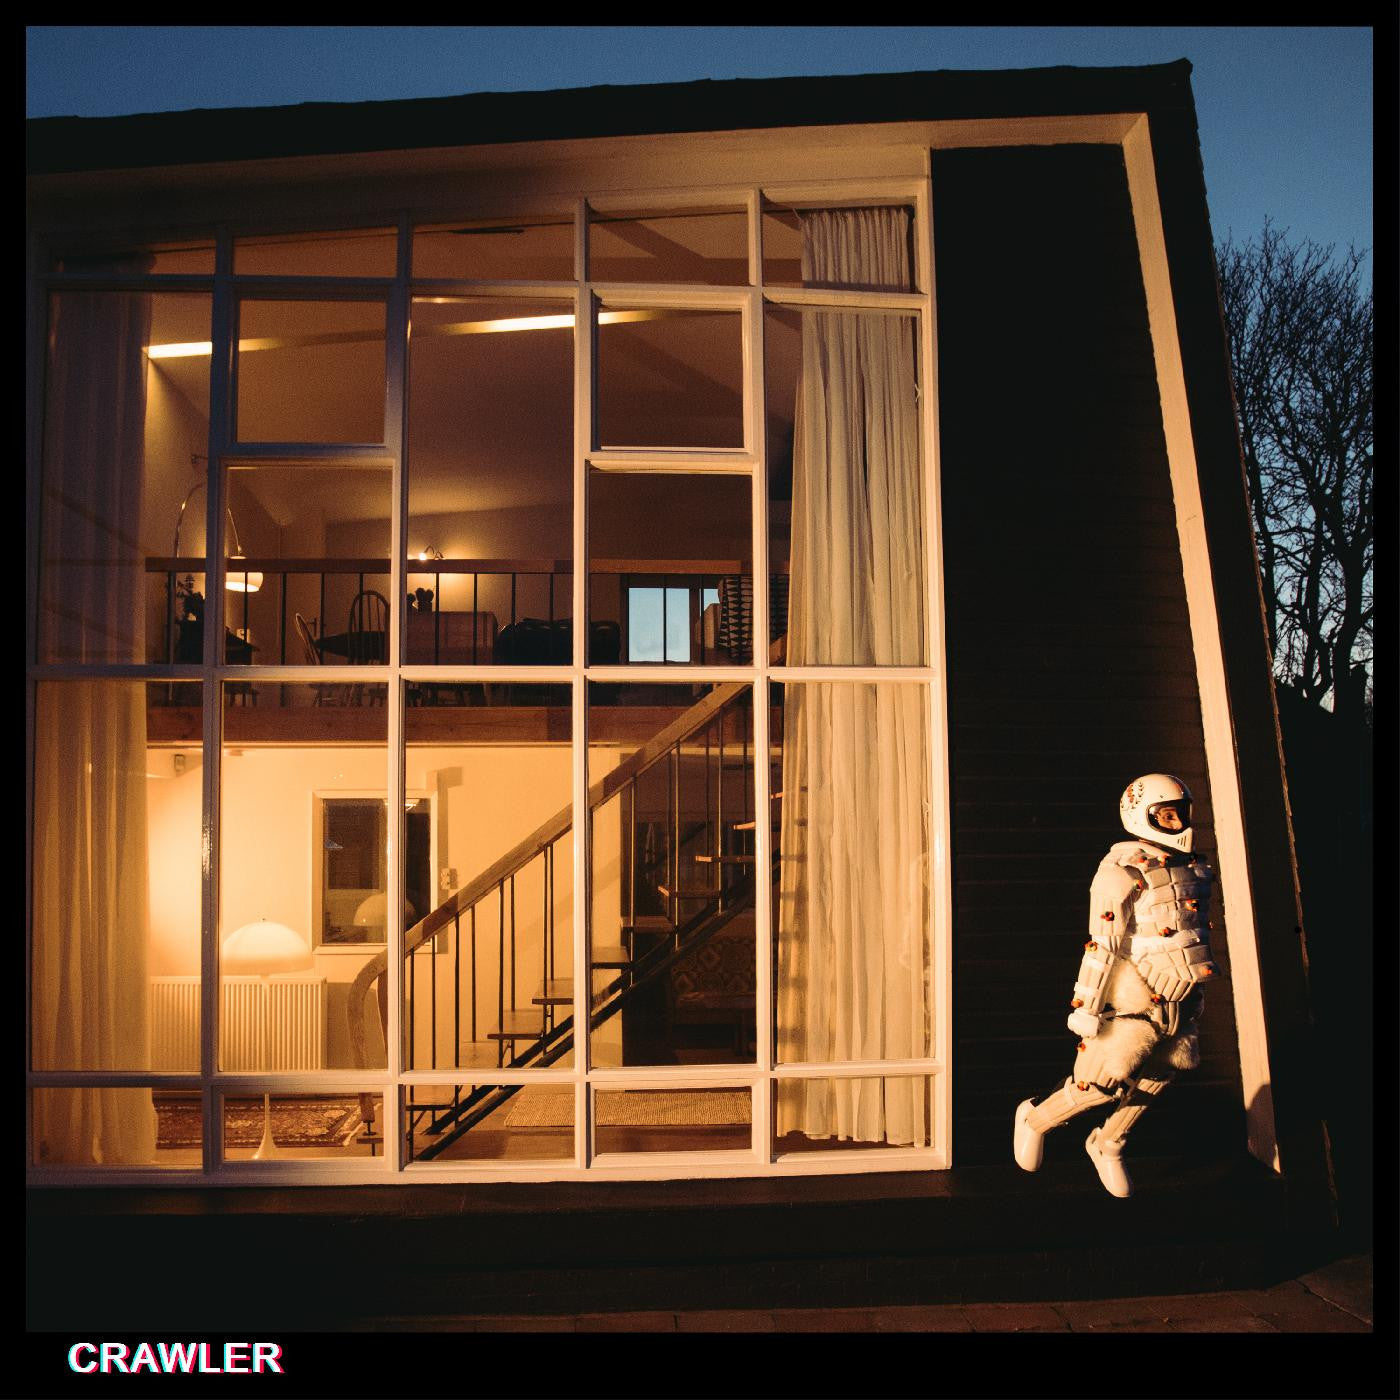 IDLES - Crawler (Vinyl LP)